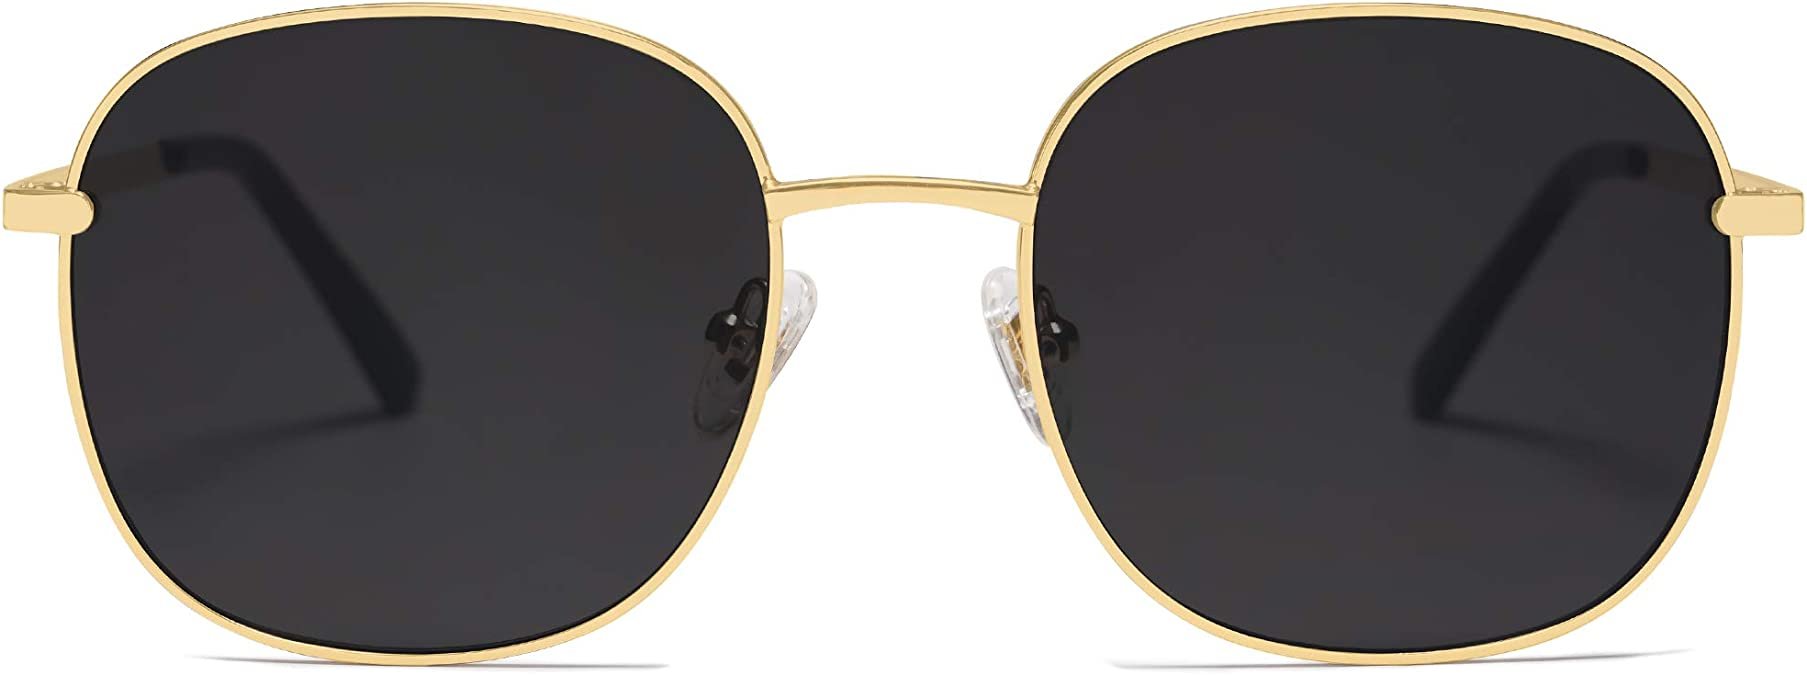 sunglasses 4.jpg